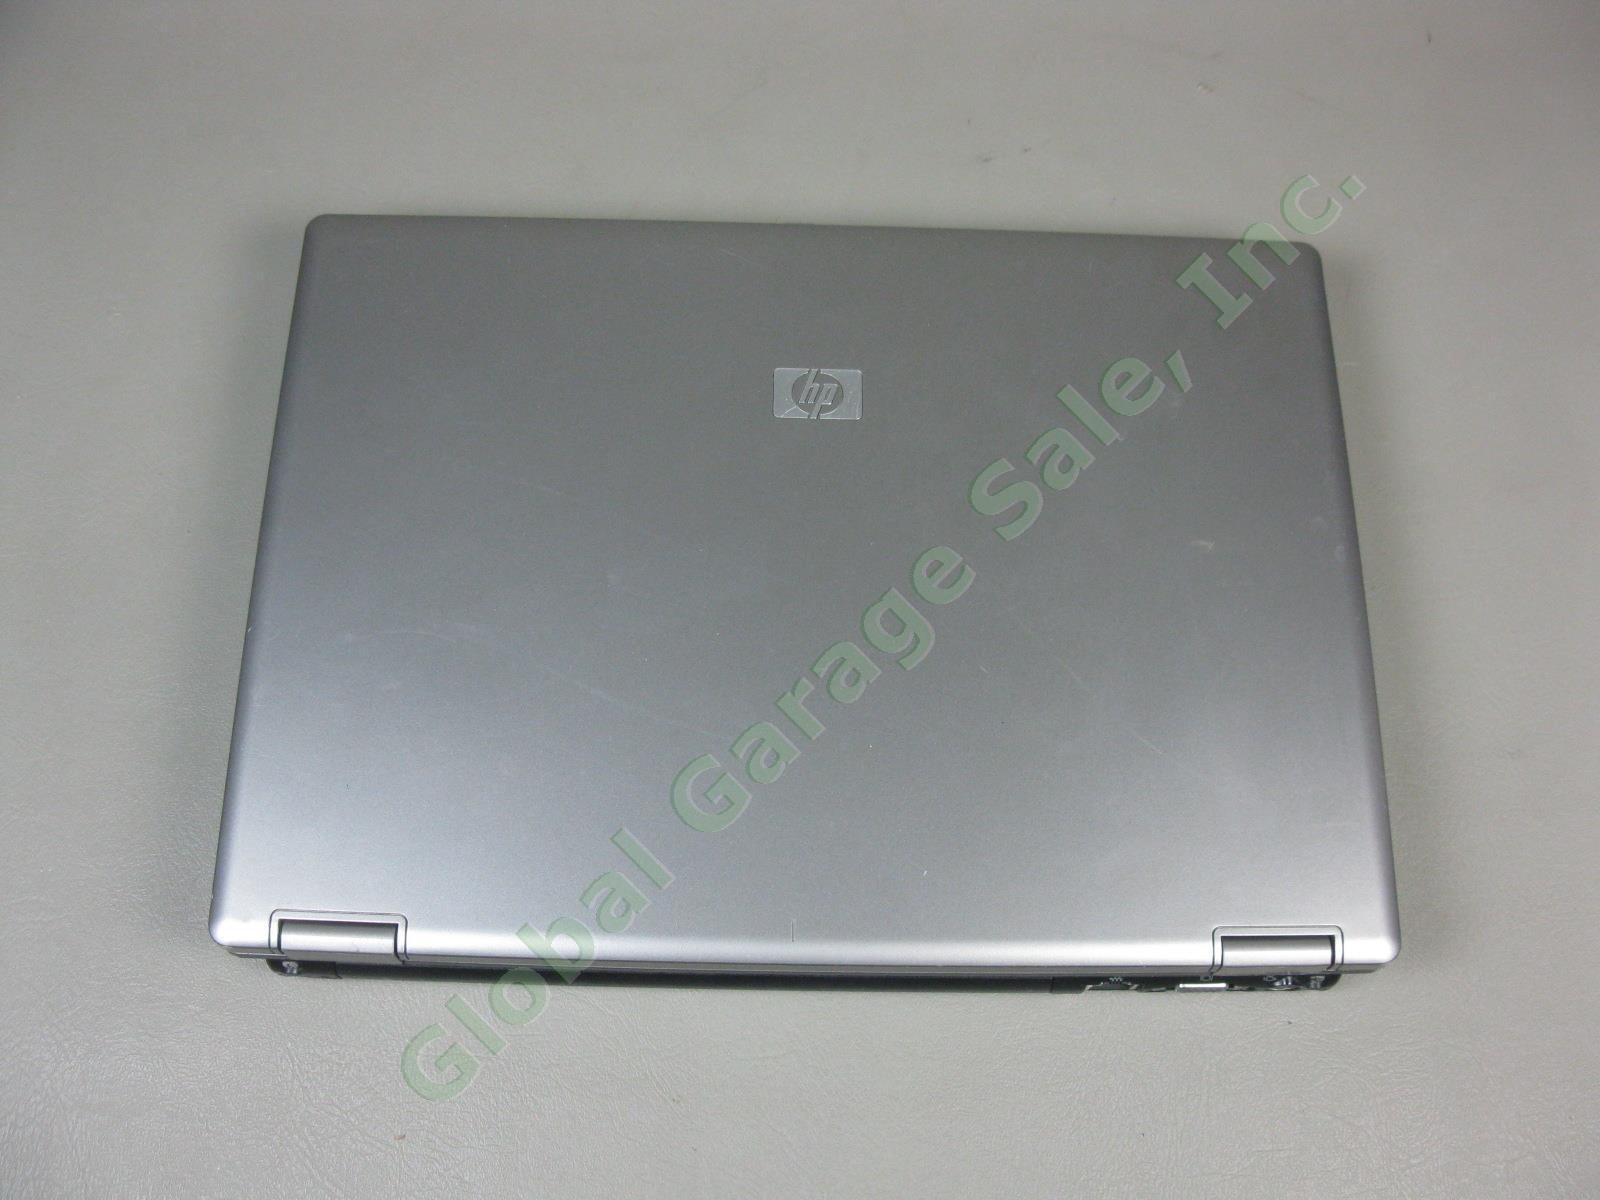 HP 6530b Laptop Computer Intel 2.40GHz 4GB RAM 160GB 14.1" Windows 7 Ultimate 7